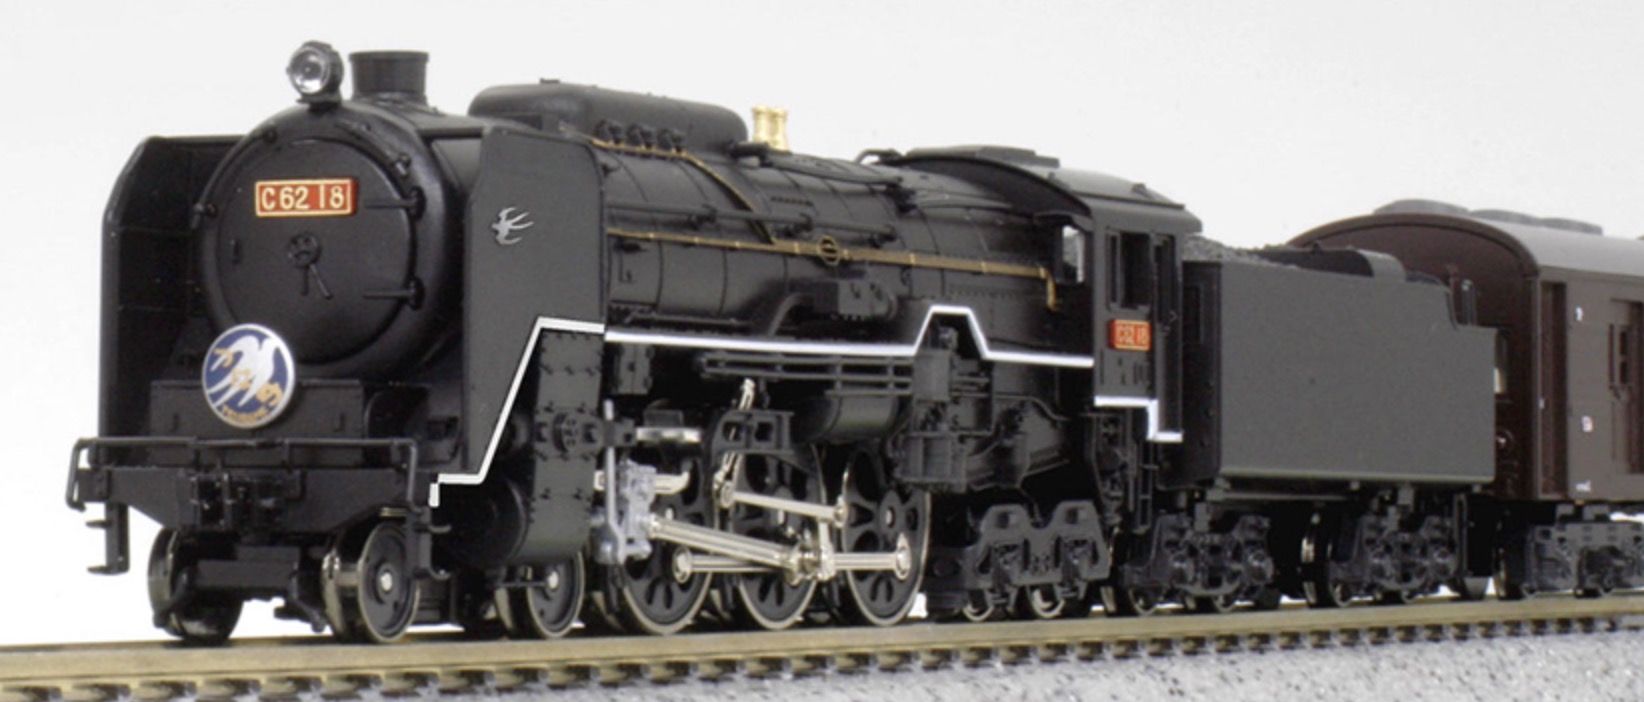 N Scale - Kato - 2019-1 - Locomotive, Steam, 4-6-4, C62 - Japanese National Railways - C62 18